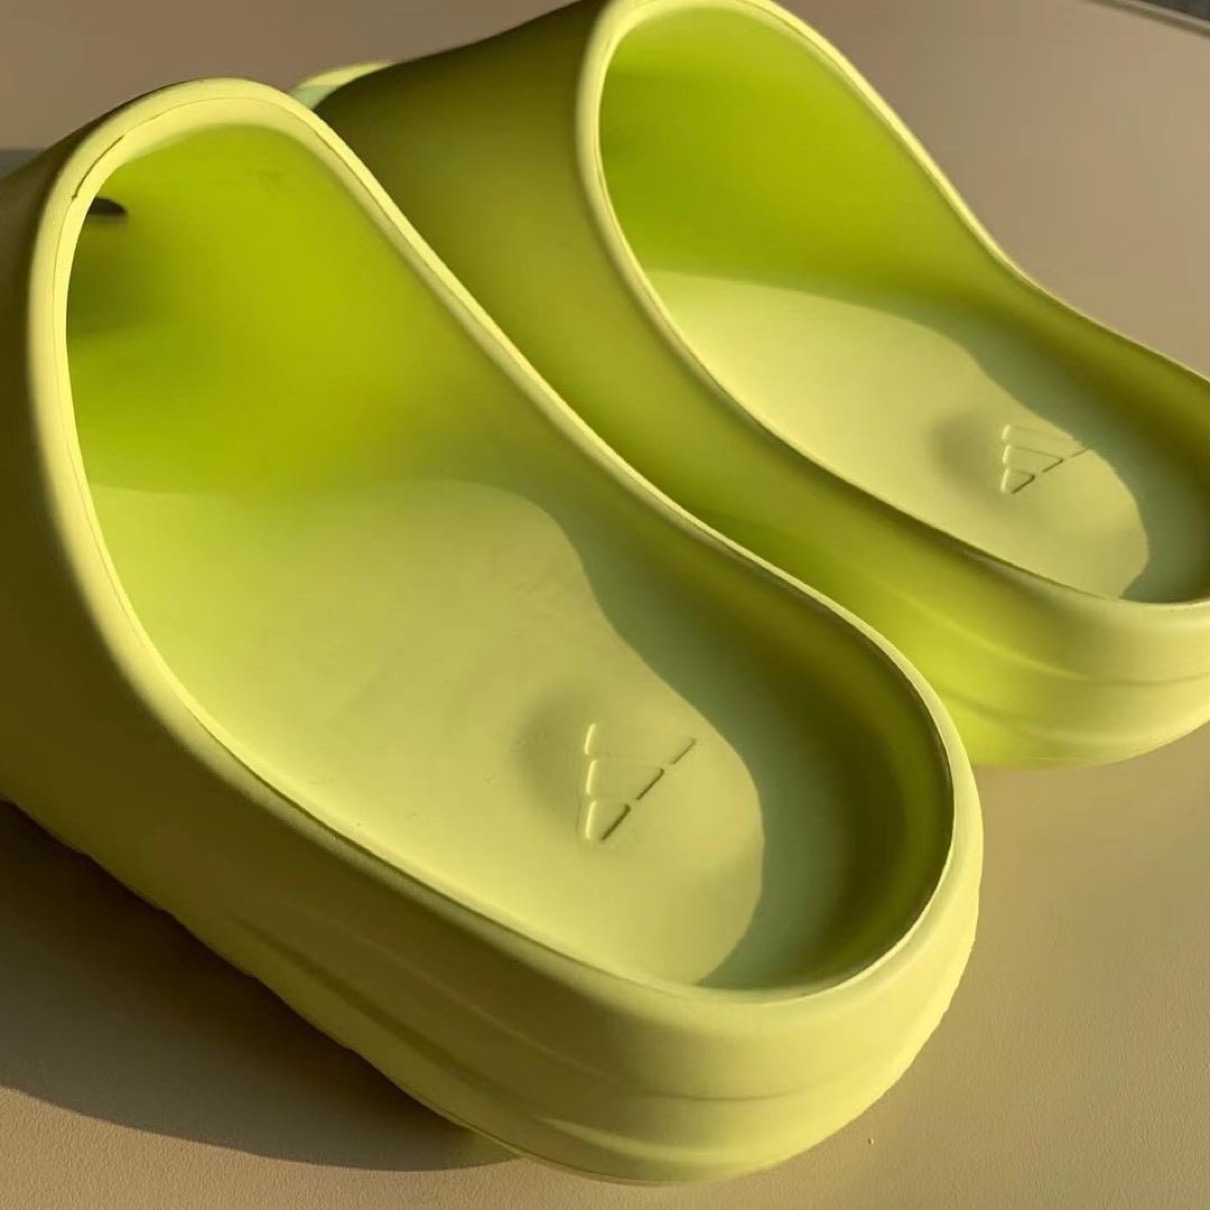 adidas】YEEZY SLIDE “Glow Green”が国内9月6日に発売予定 | UP TO DATE